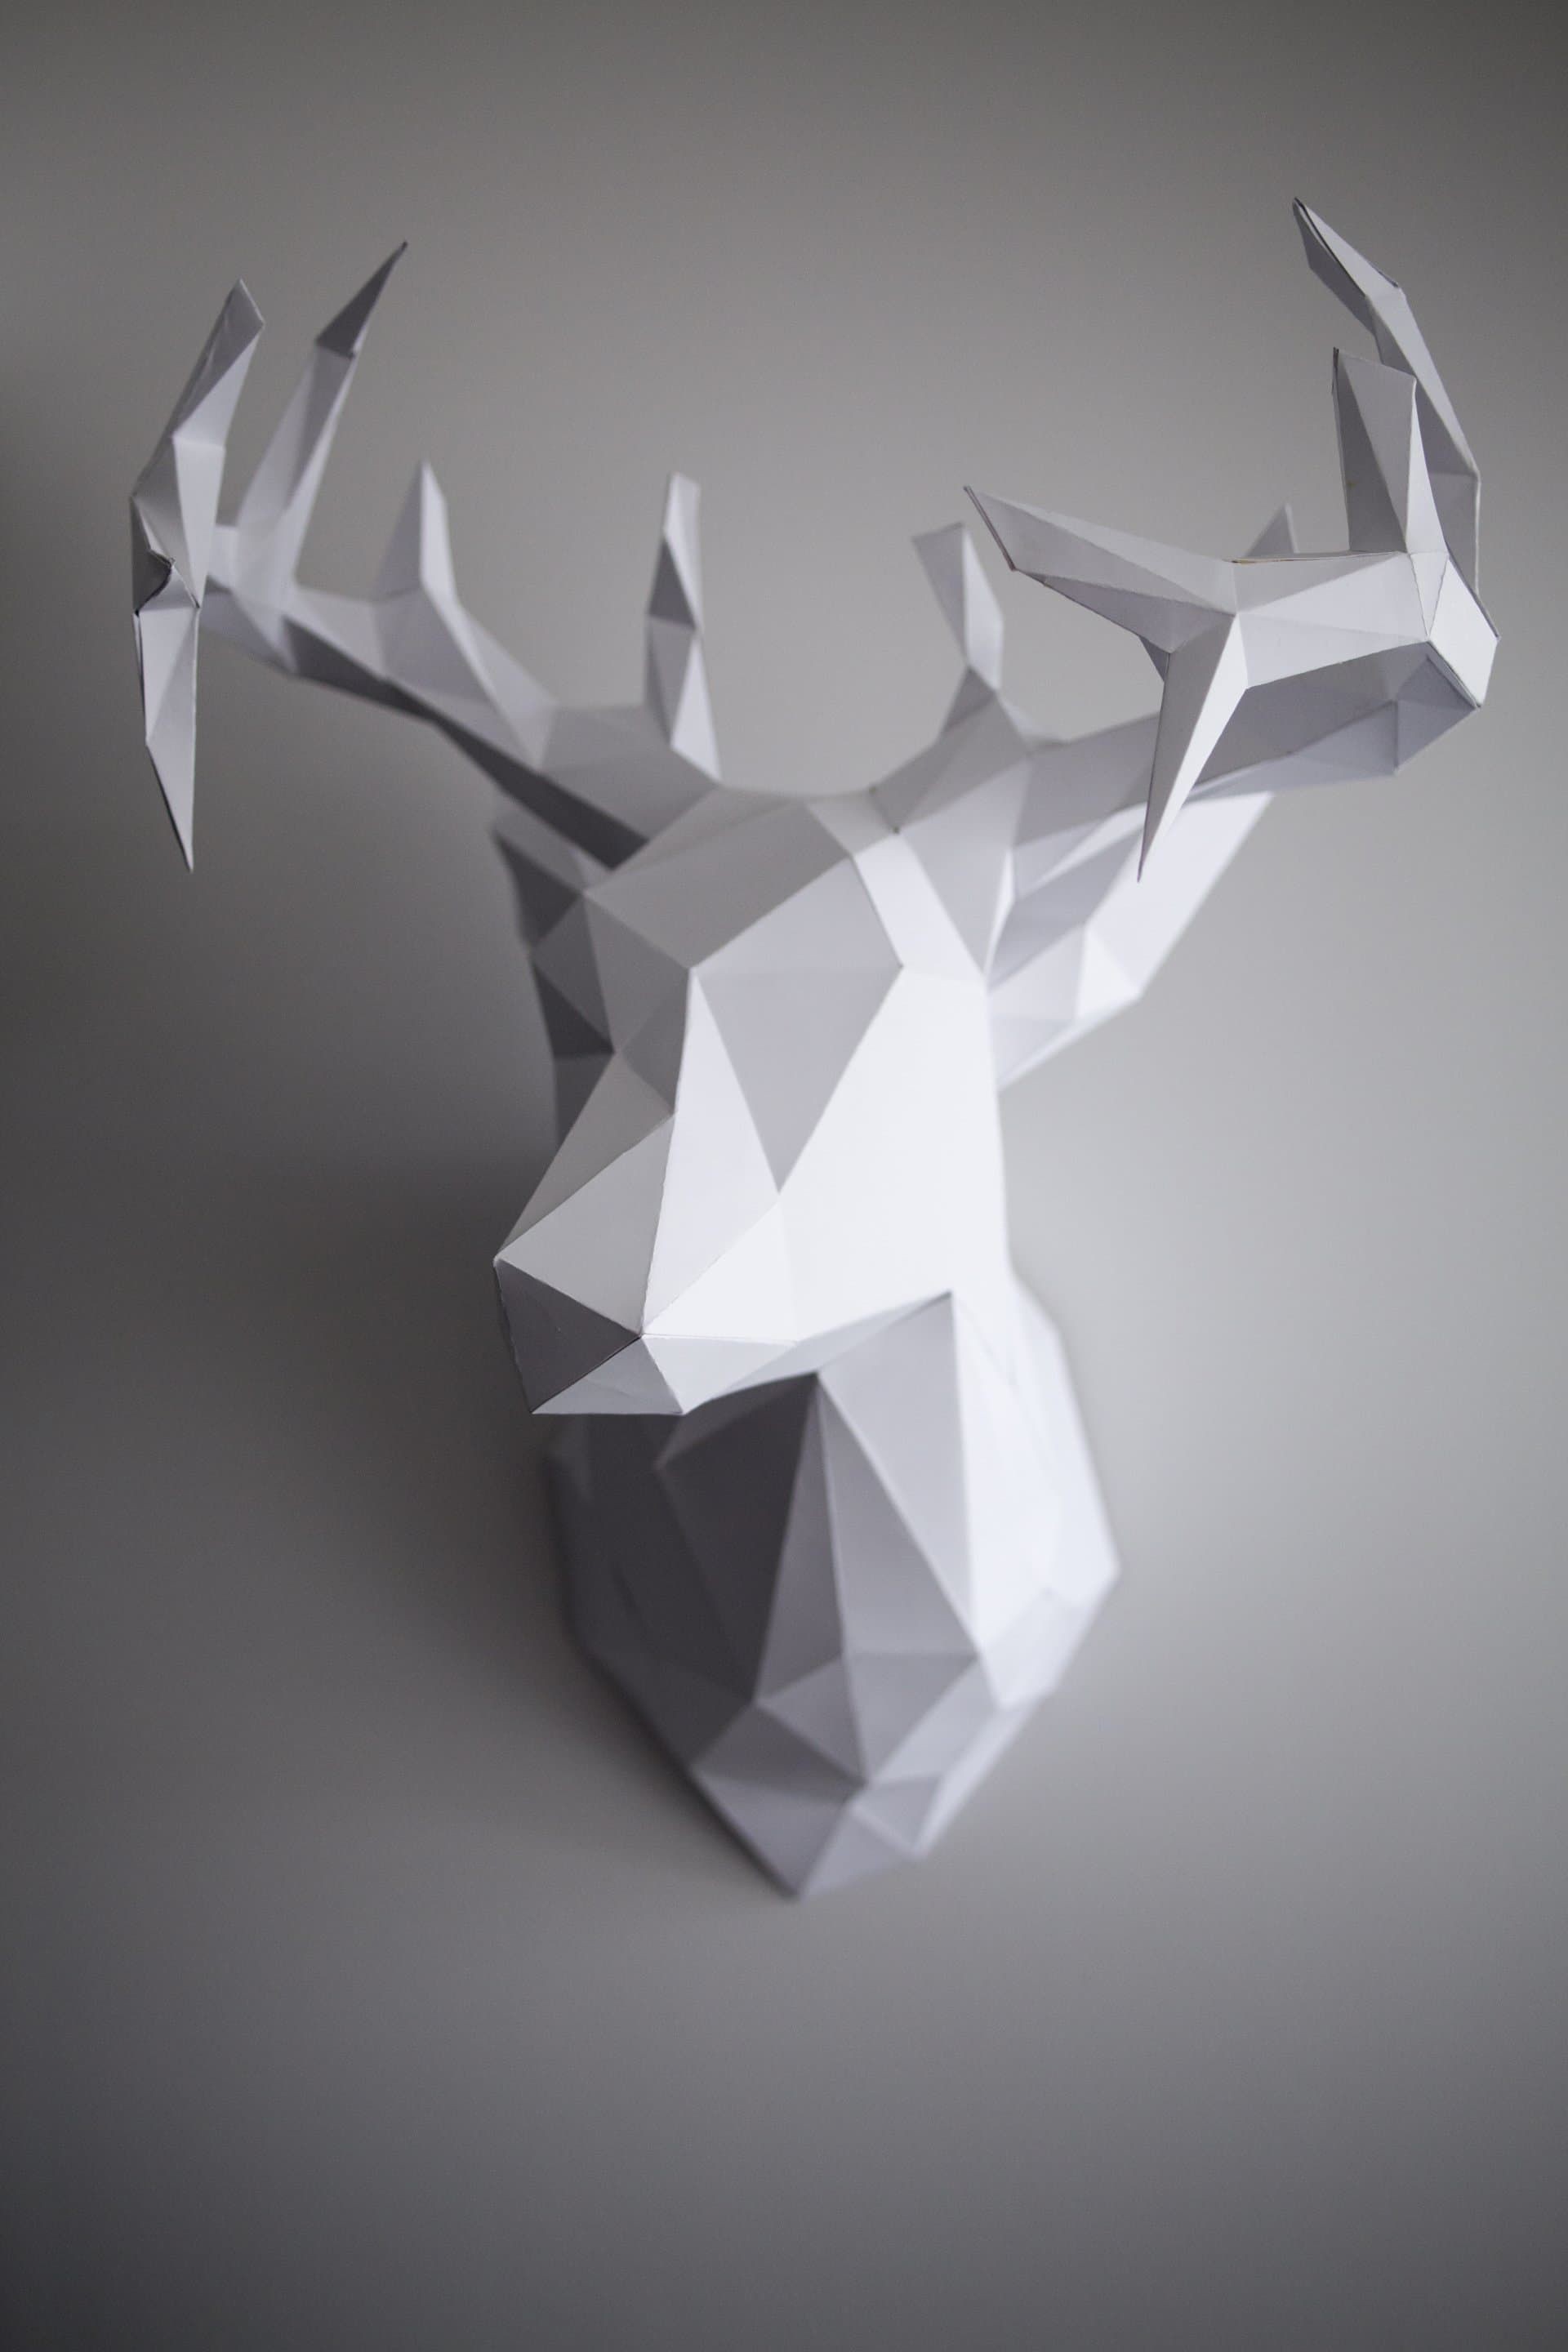 Papercraft Deer Head Diy 3d Paper Reindeer Head Just In Time for Christmas